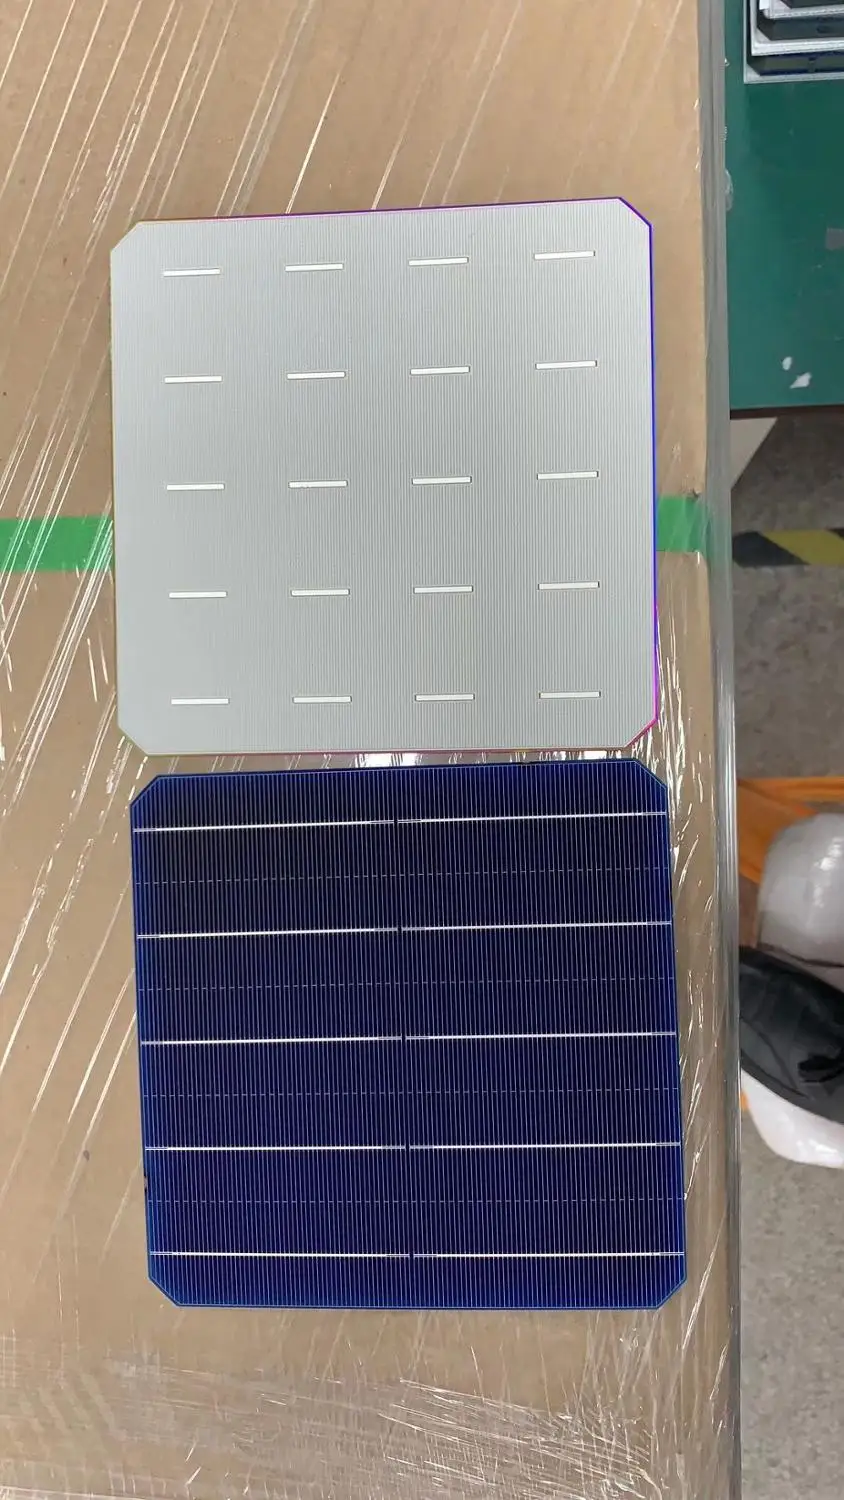 60Pcs 5.1 W/Pc ' er Monokrystallinske Solcelle 156.75 * 156.75 mm For DIY Solcelle Mono Solar Panel